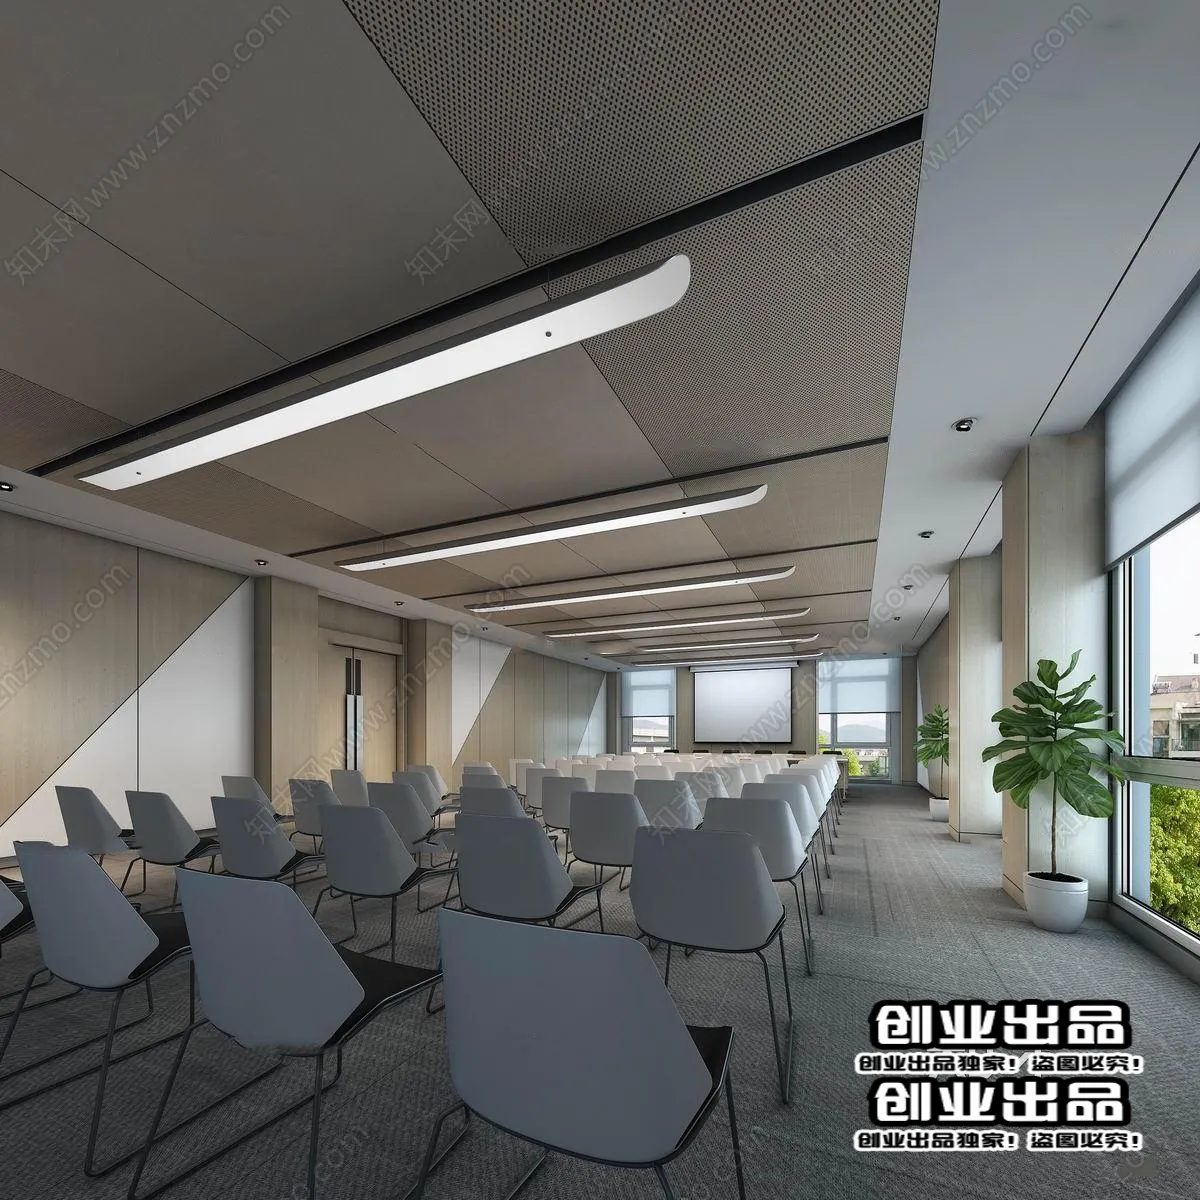 3D OFFICE INTERIOR (VRAY) – MEETING ROOM 3D SCENES – 095